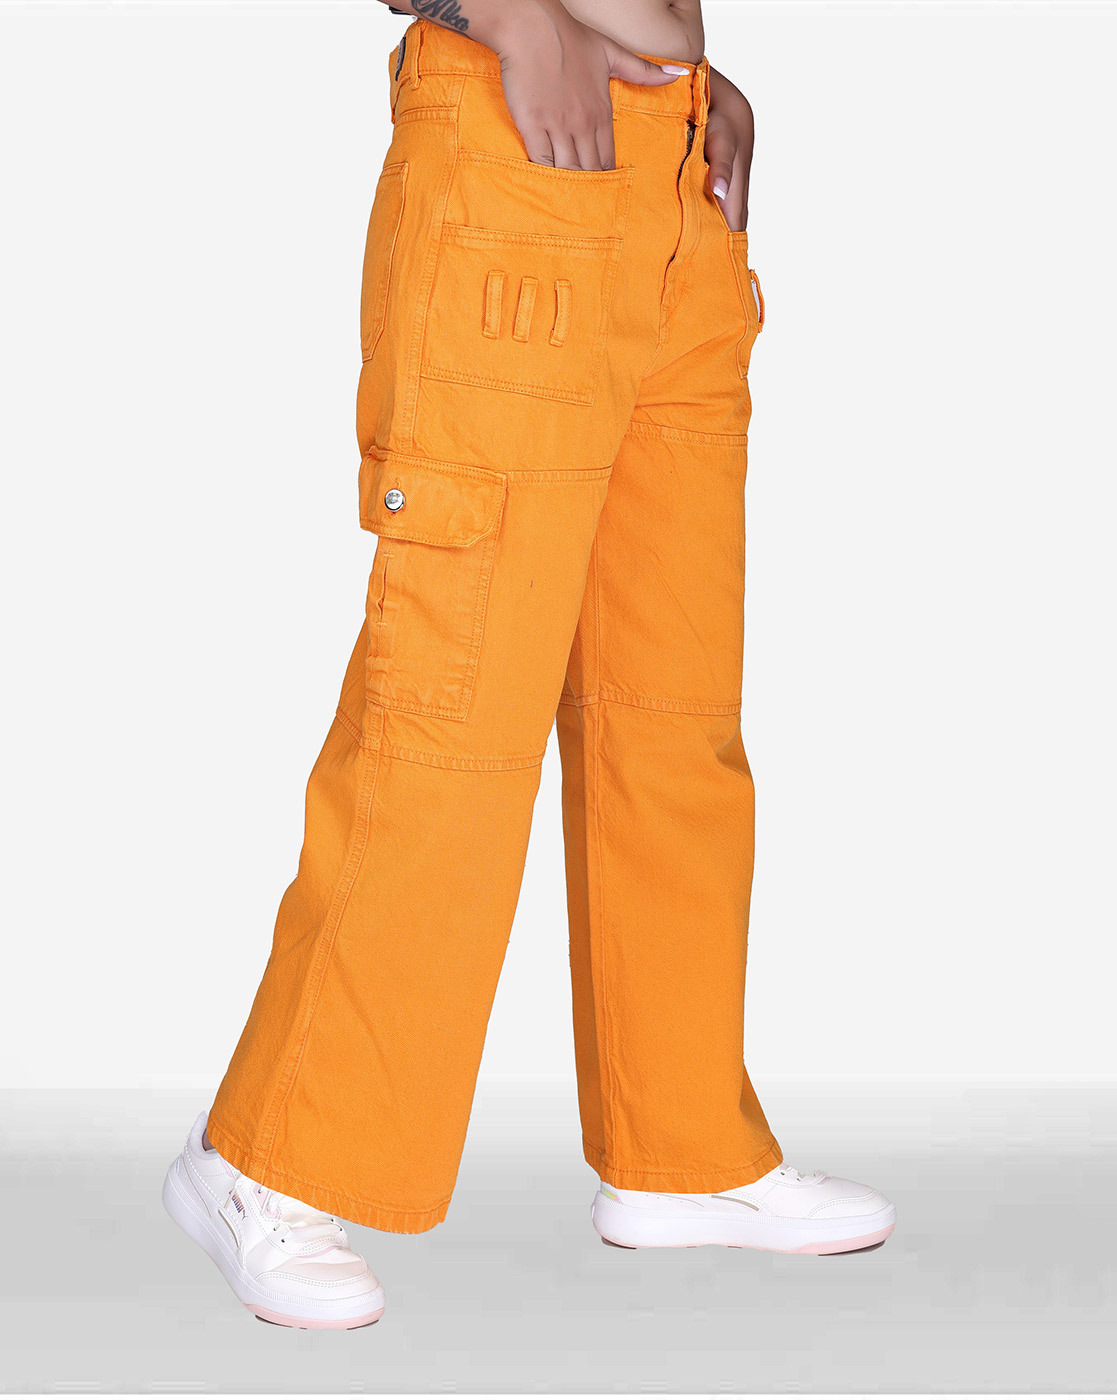 Karl Kani Orange Cargo Pants | Pants | PrettyLittleThing USA